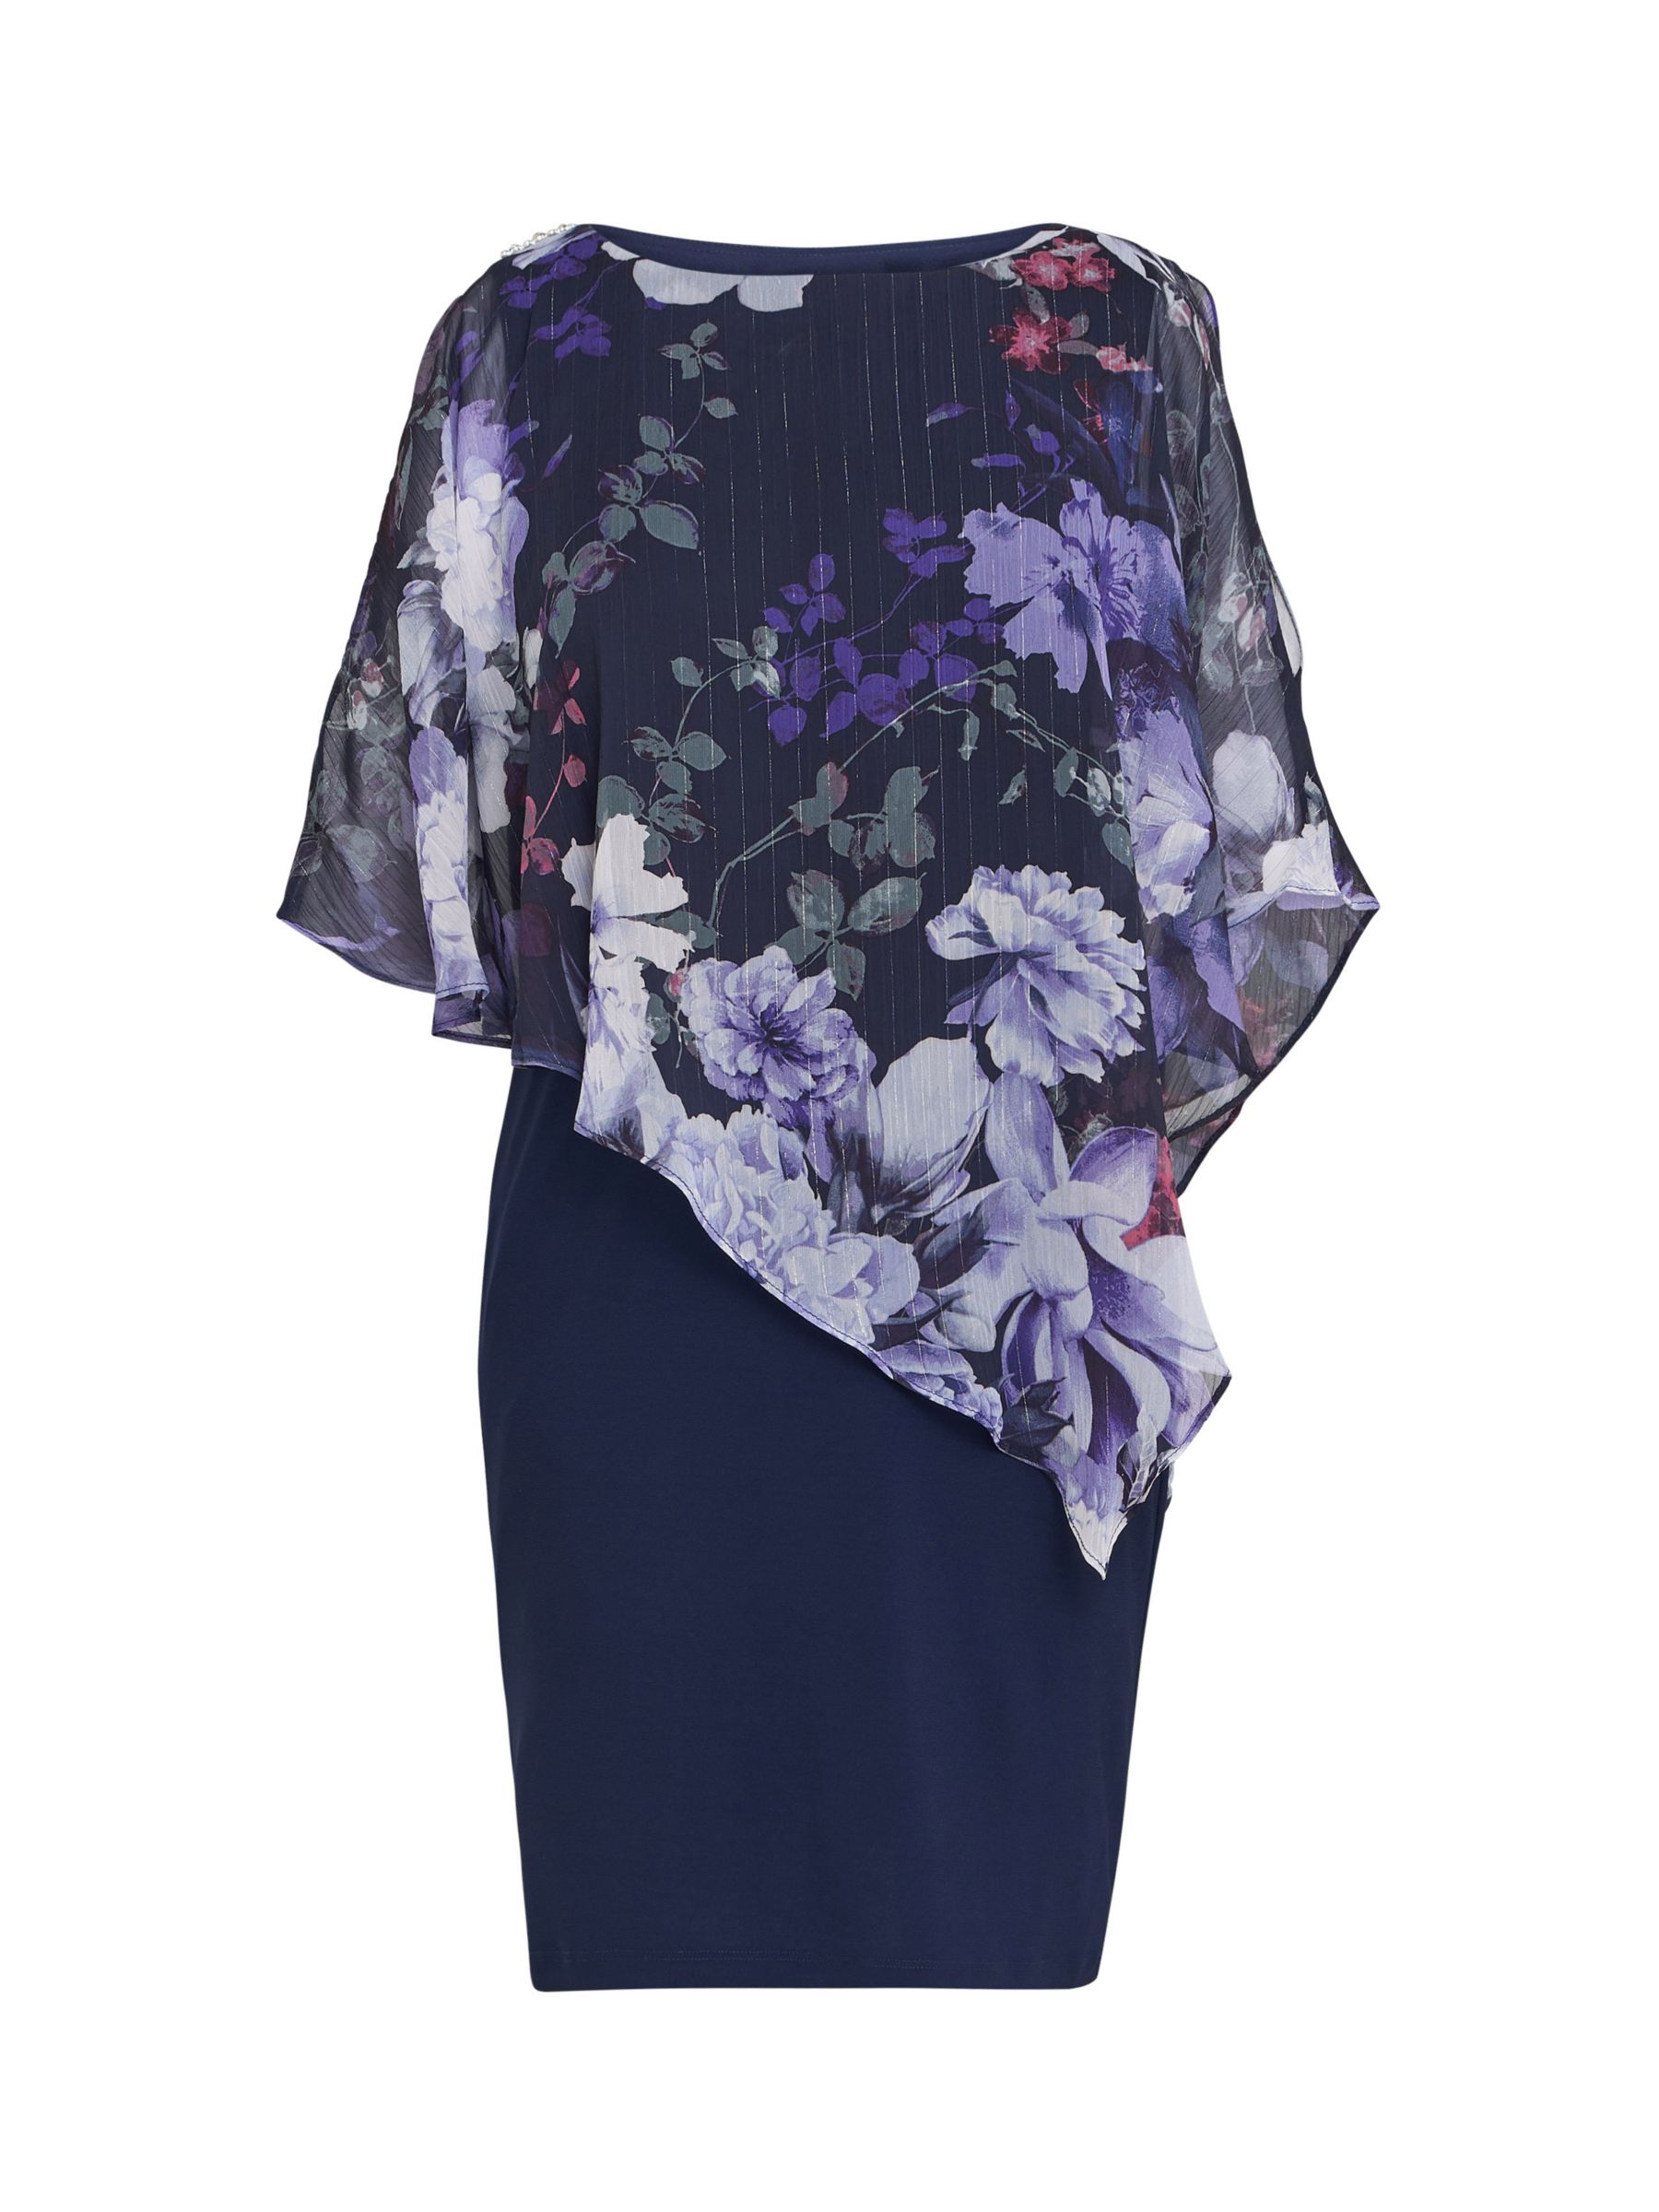 Gina Bacconi Estelle Floral Asymmetric Embellished Dress, Navy/Multi at ...